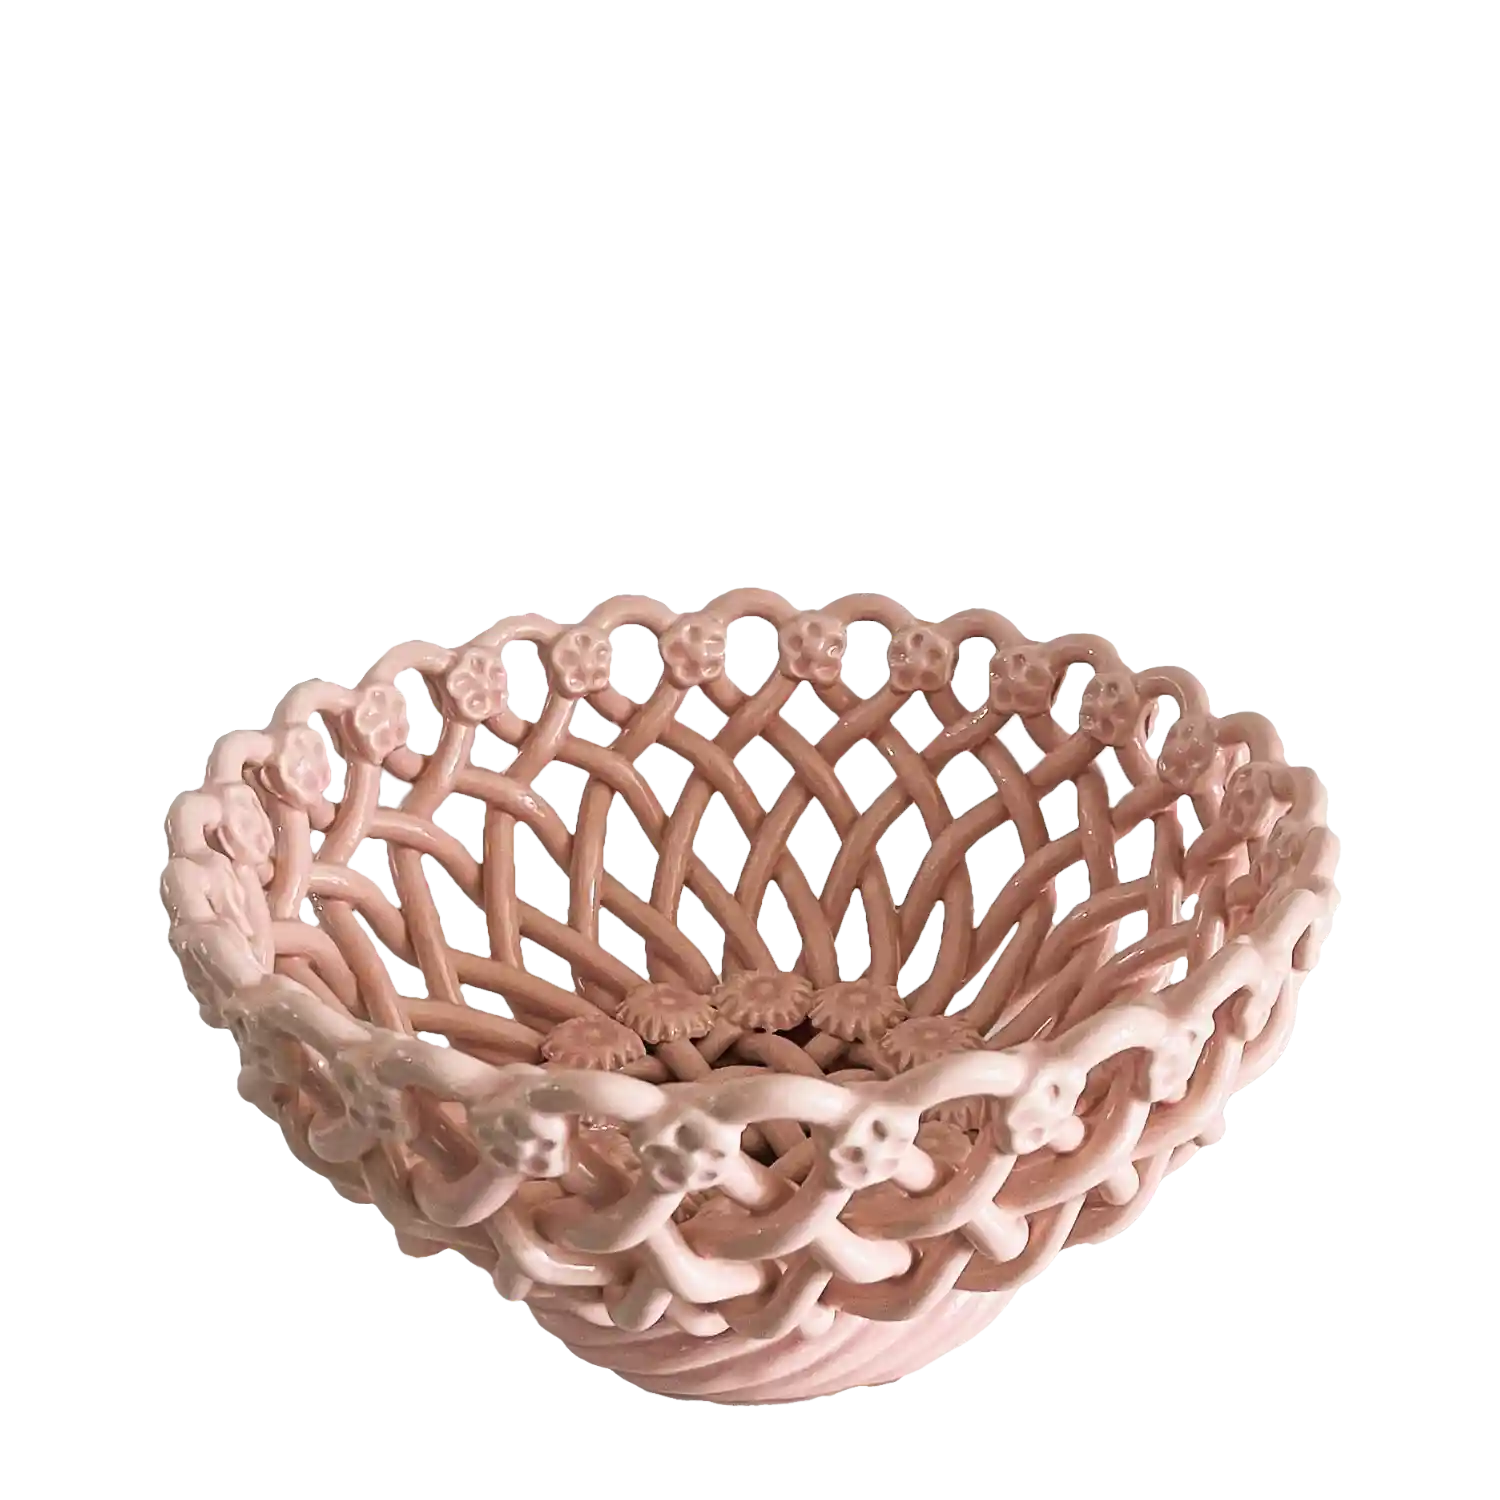 Iconic woven basket without base